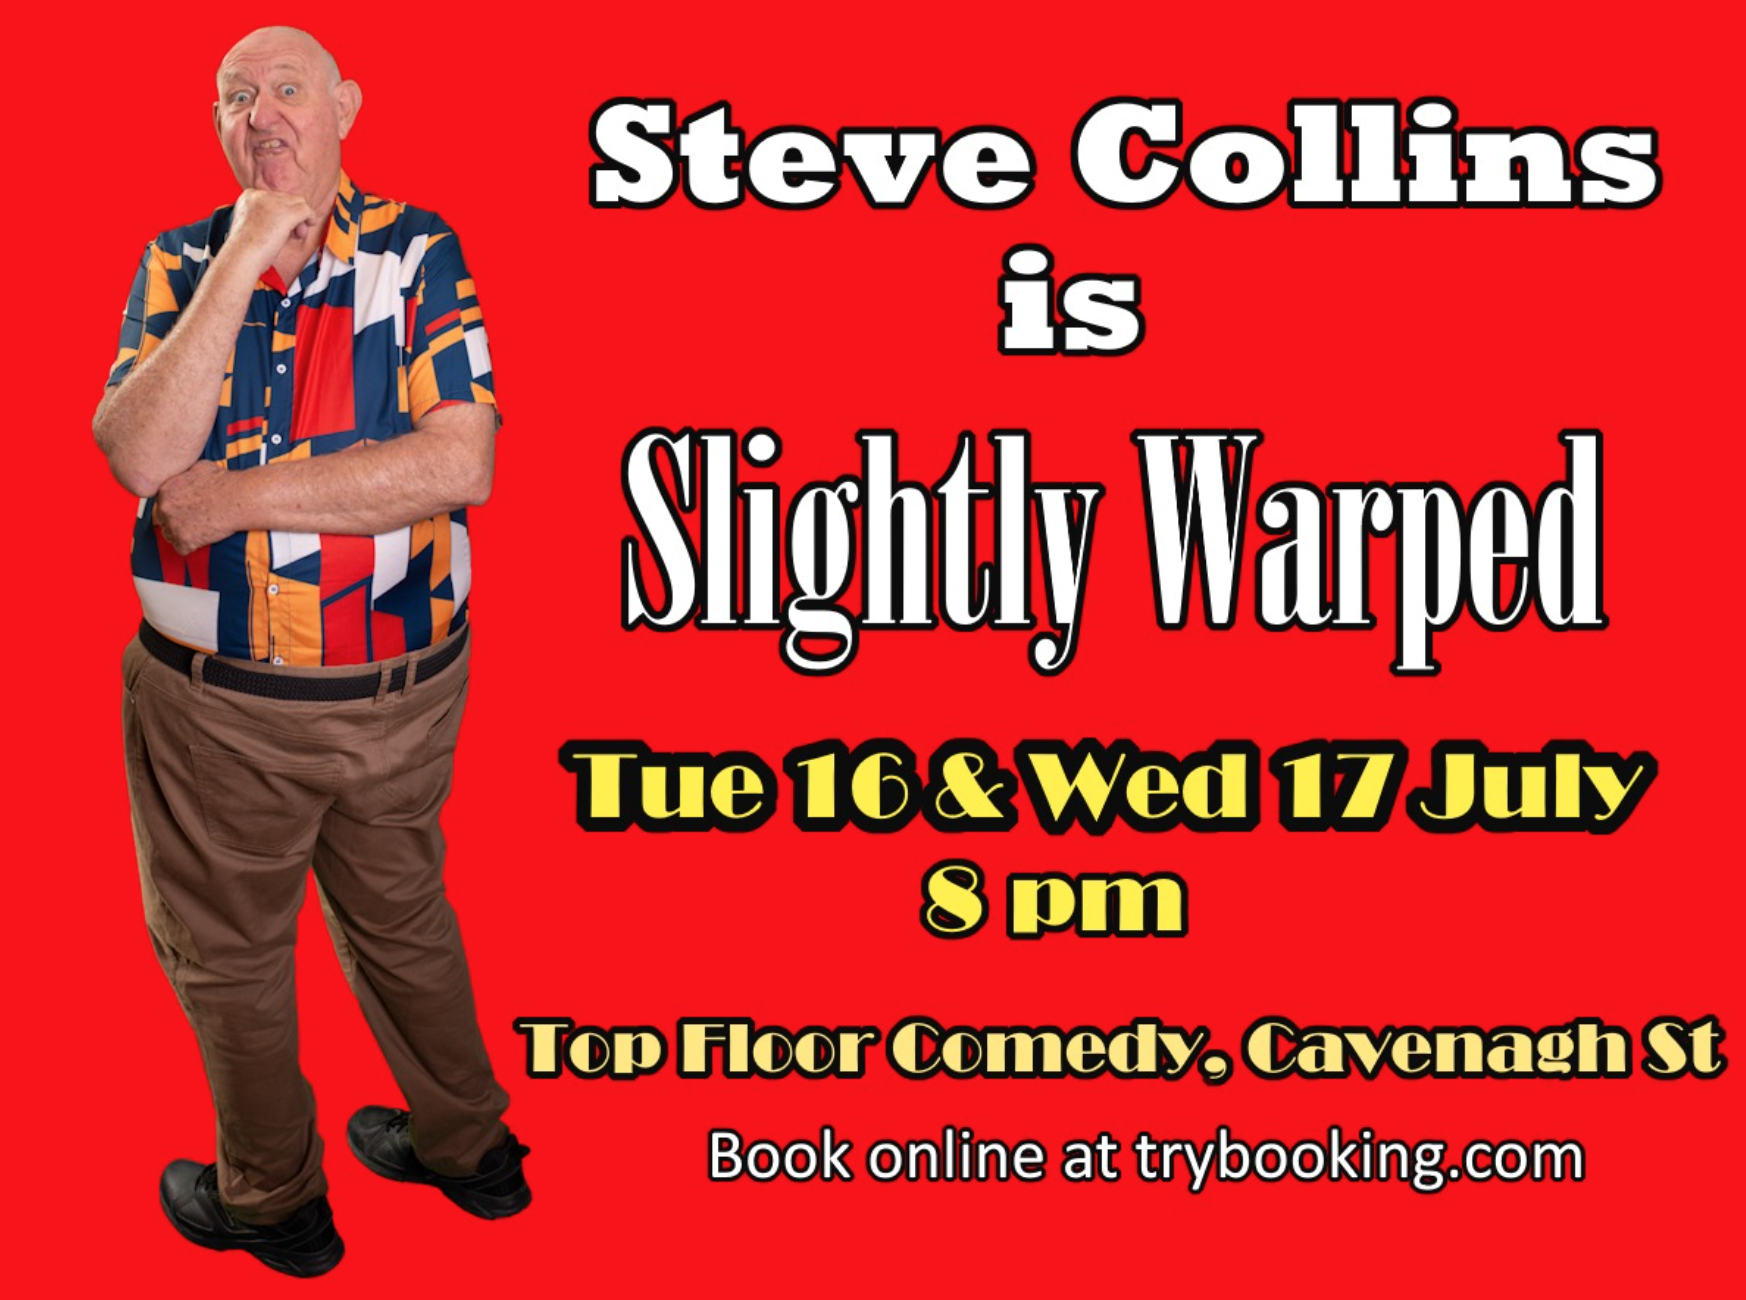 Steve Collins is Slightly Warped